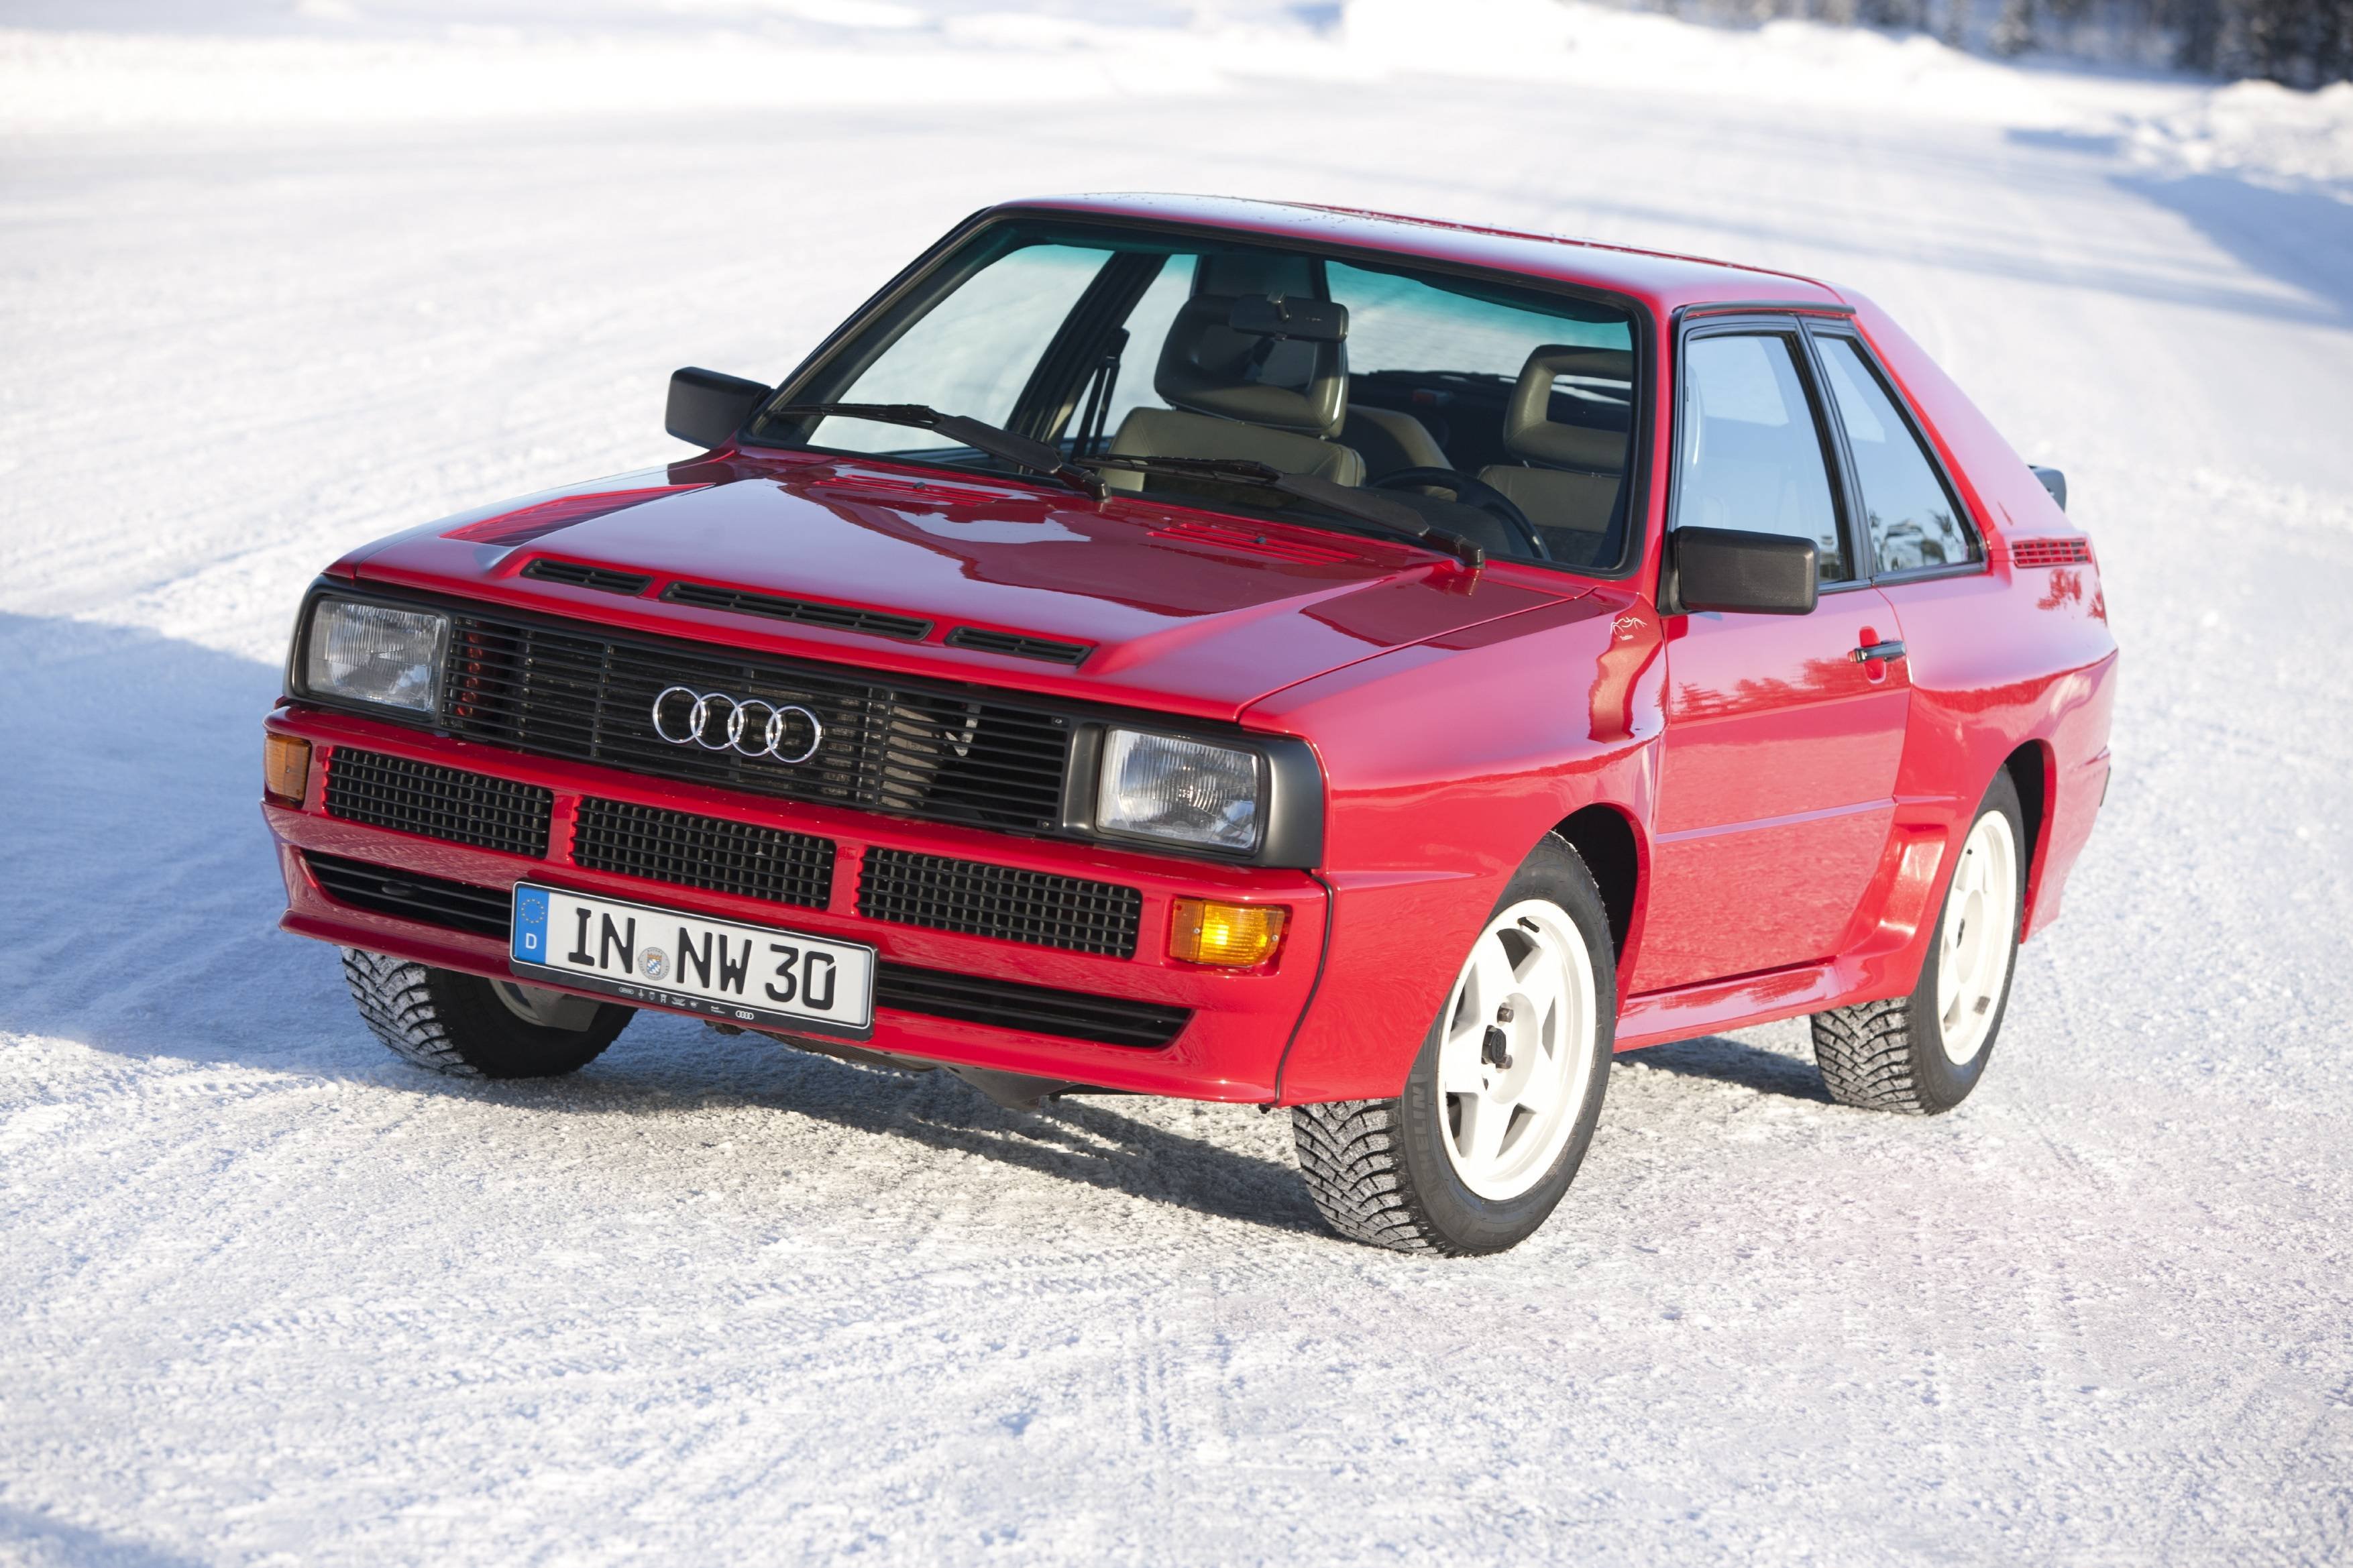 Ауди спорт кватро. Audi Sport quattro 1984. Audi quattro 80 Sport. Ауди кватро 1984. Ауди 80 спорт кватро.